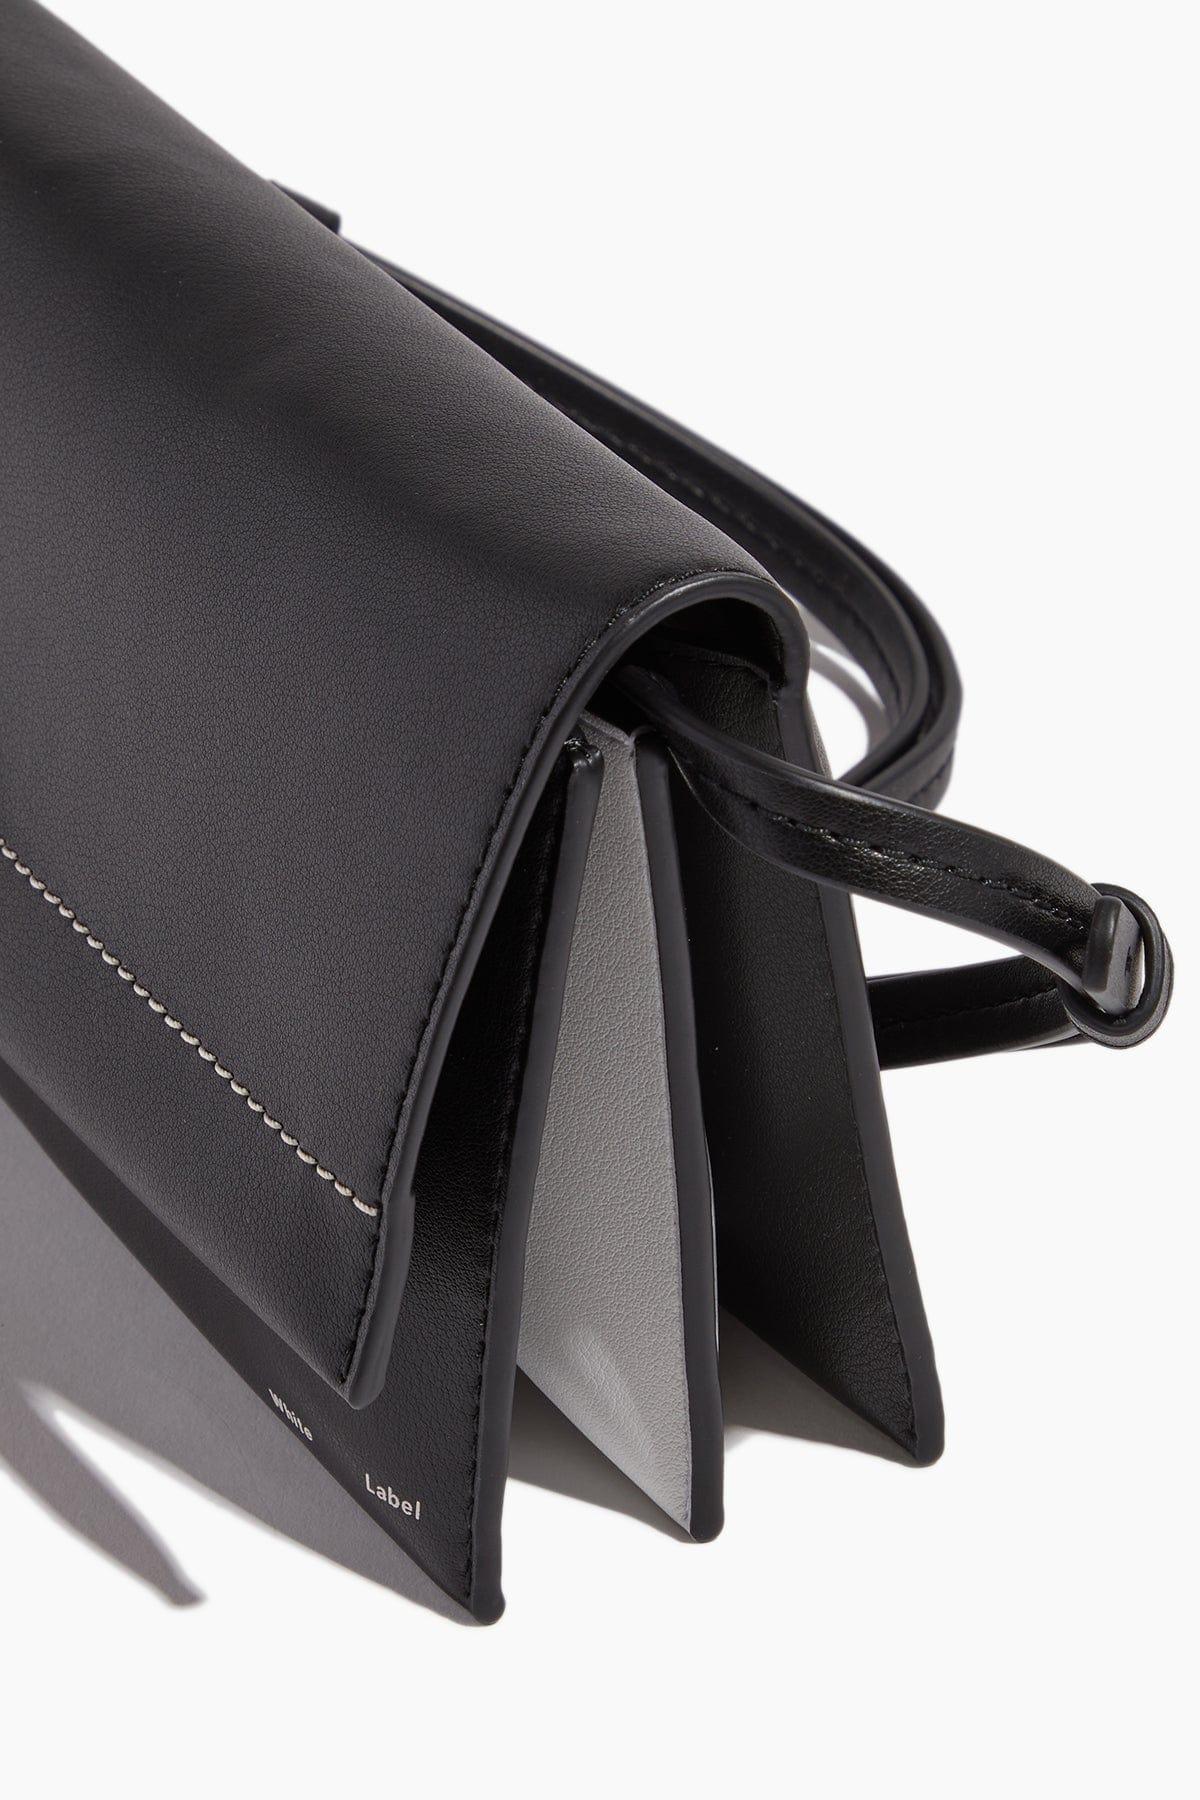 Proenza Schouler Black Small White Label Accordion Flap Shoulder Bag